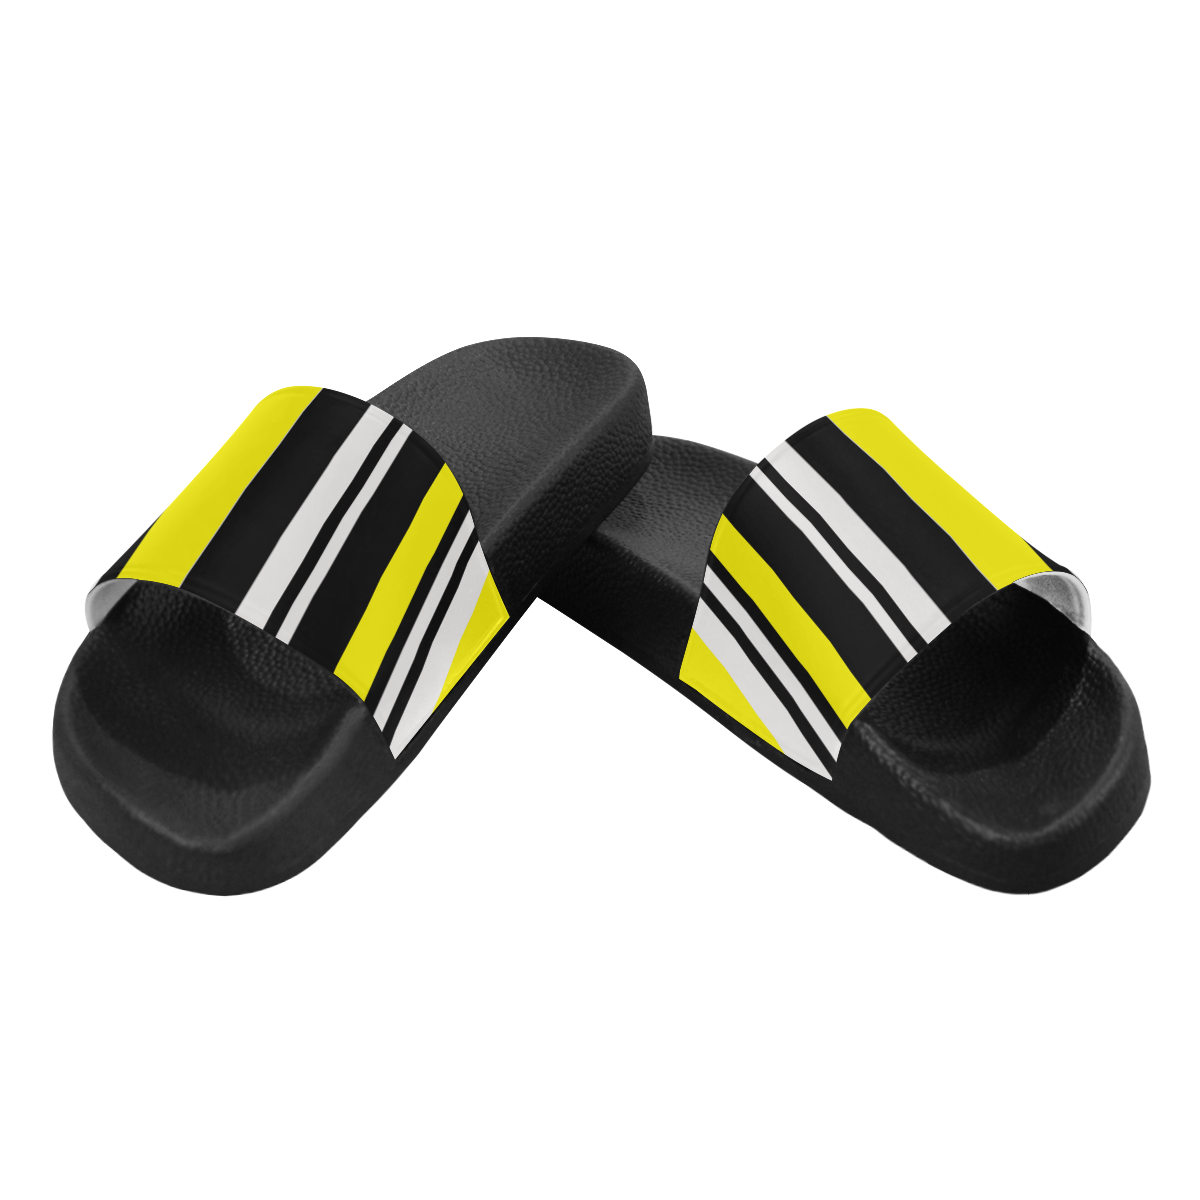 by stripes Women's Slide Sandals (Model 057)